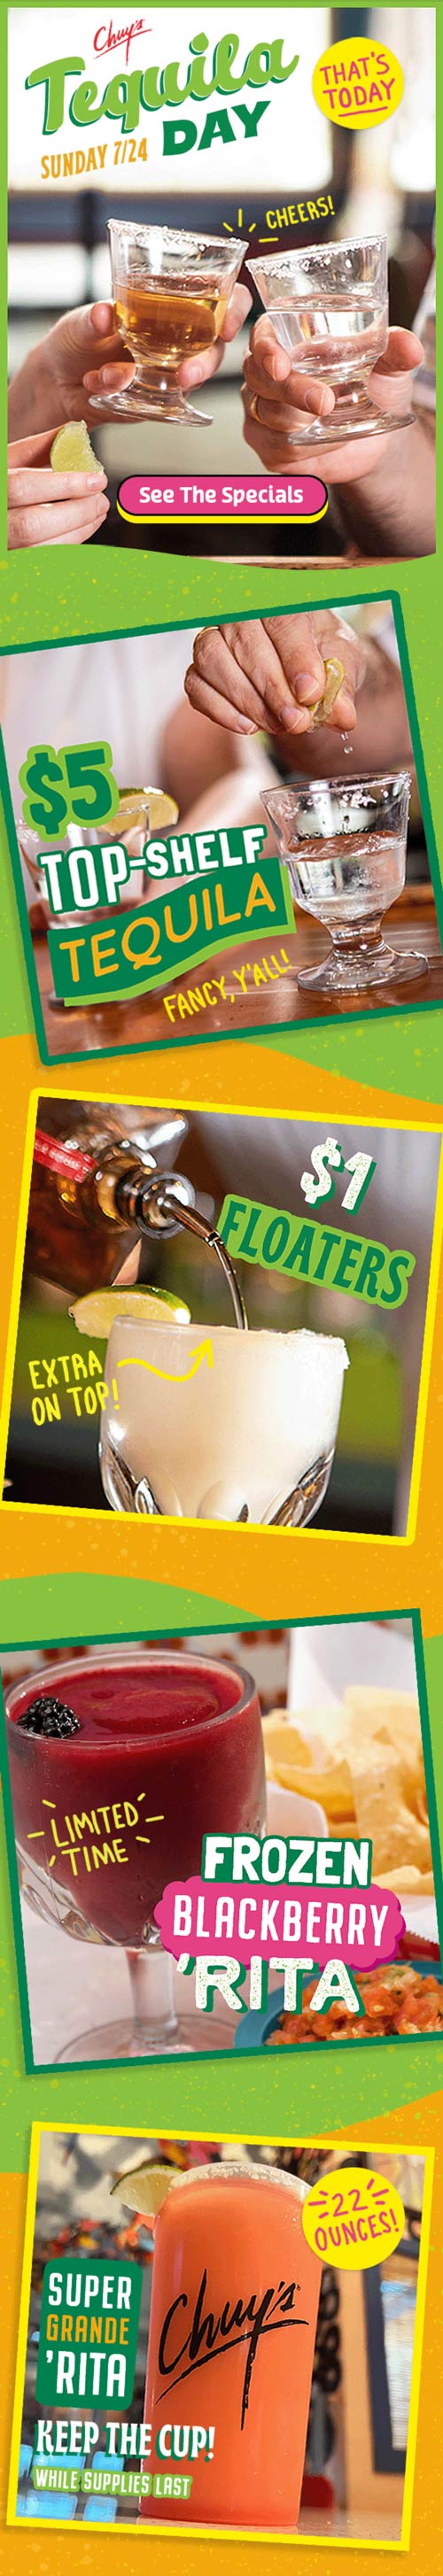 Chuys restaurants Coupon  $5 top shelf tequila shots & $1 floaters today at Chuys restaurants #chuys 